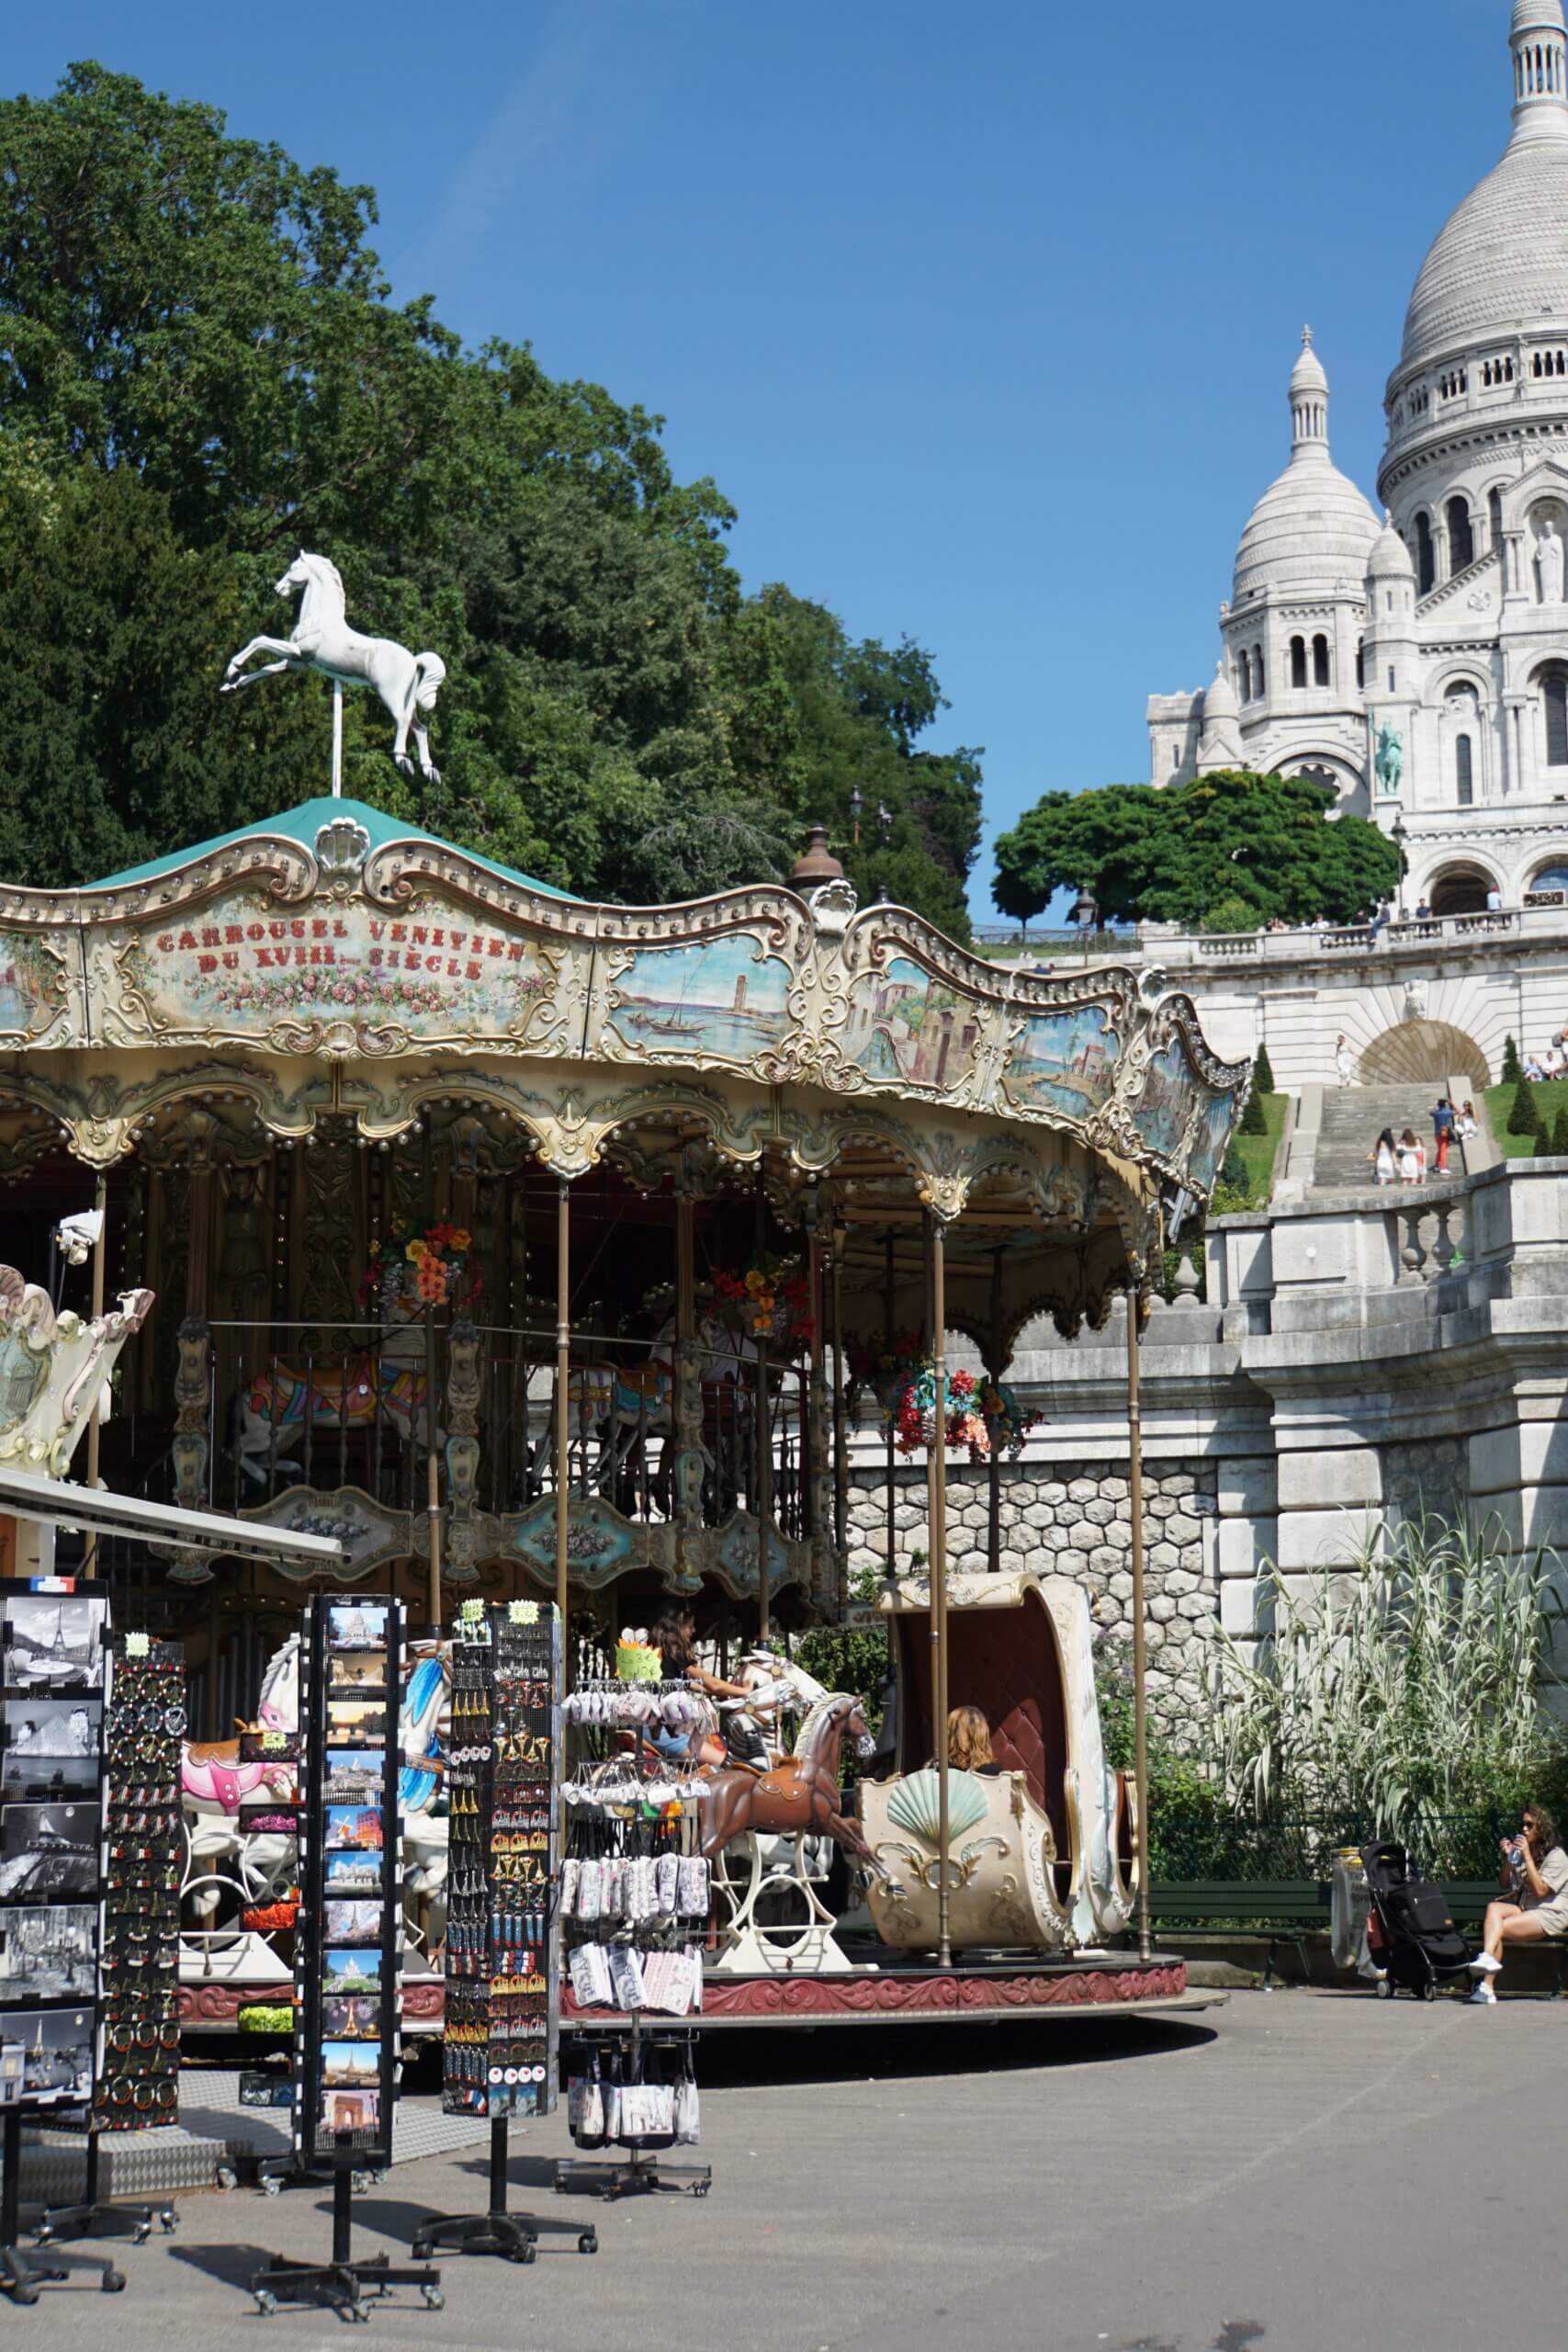 Schönste Fotolocations im Montmartre - Carrousel de Saint-Pierre stylerebelles